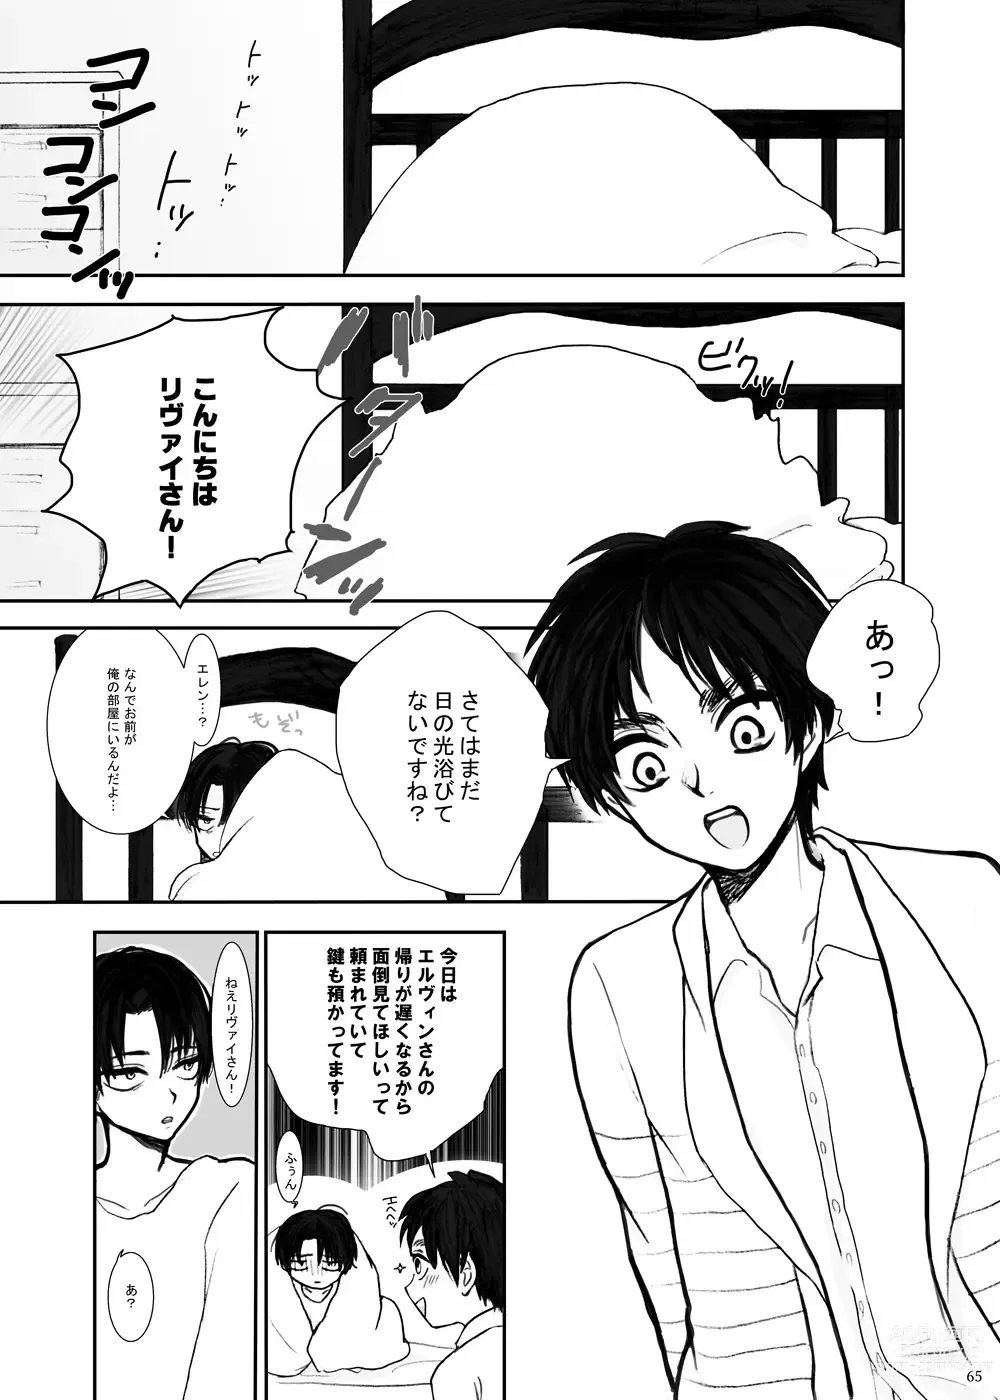 Page 61 of doujinshi Hizumi